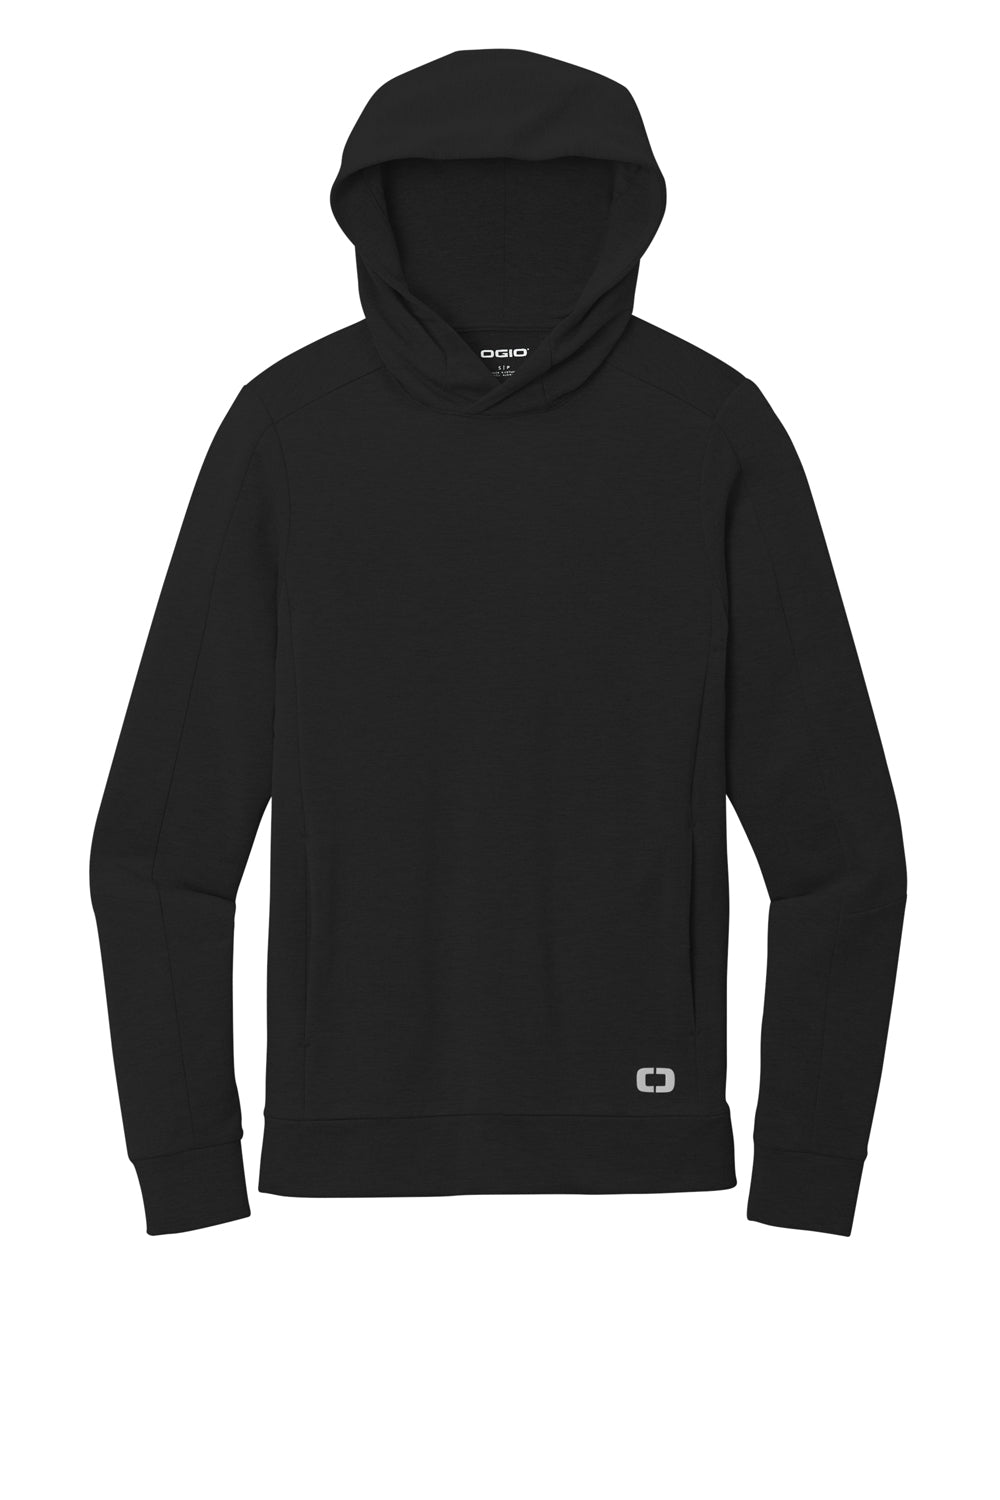 Ogio OG814 Luuma Hooded Sweatshirt Hoodie Blacktop Flat Front